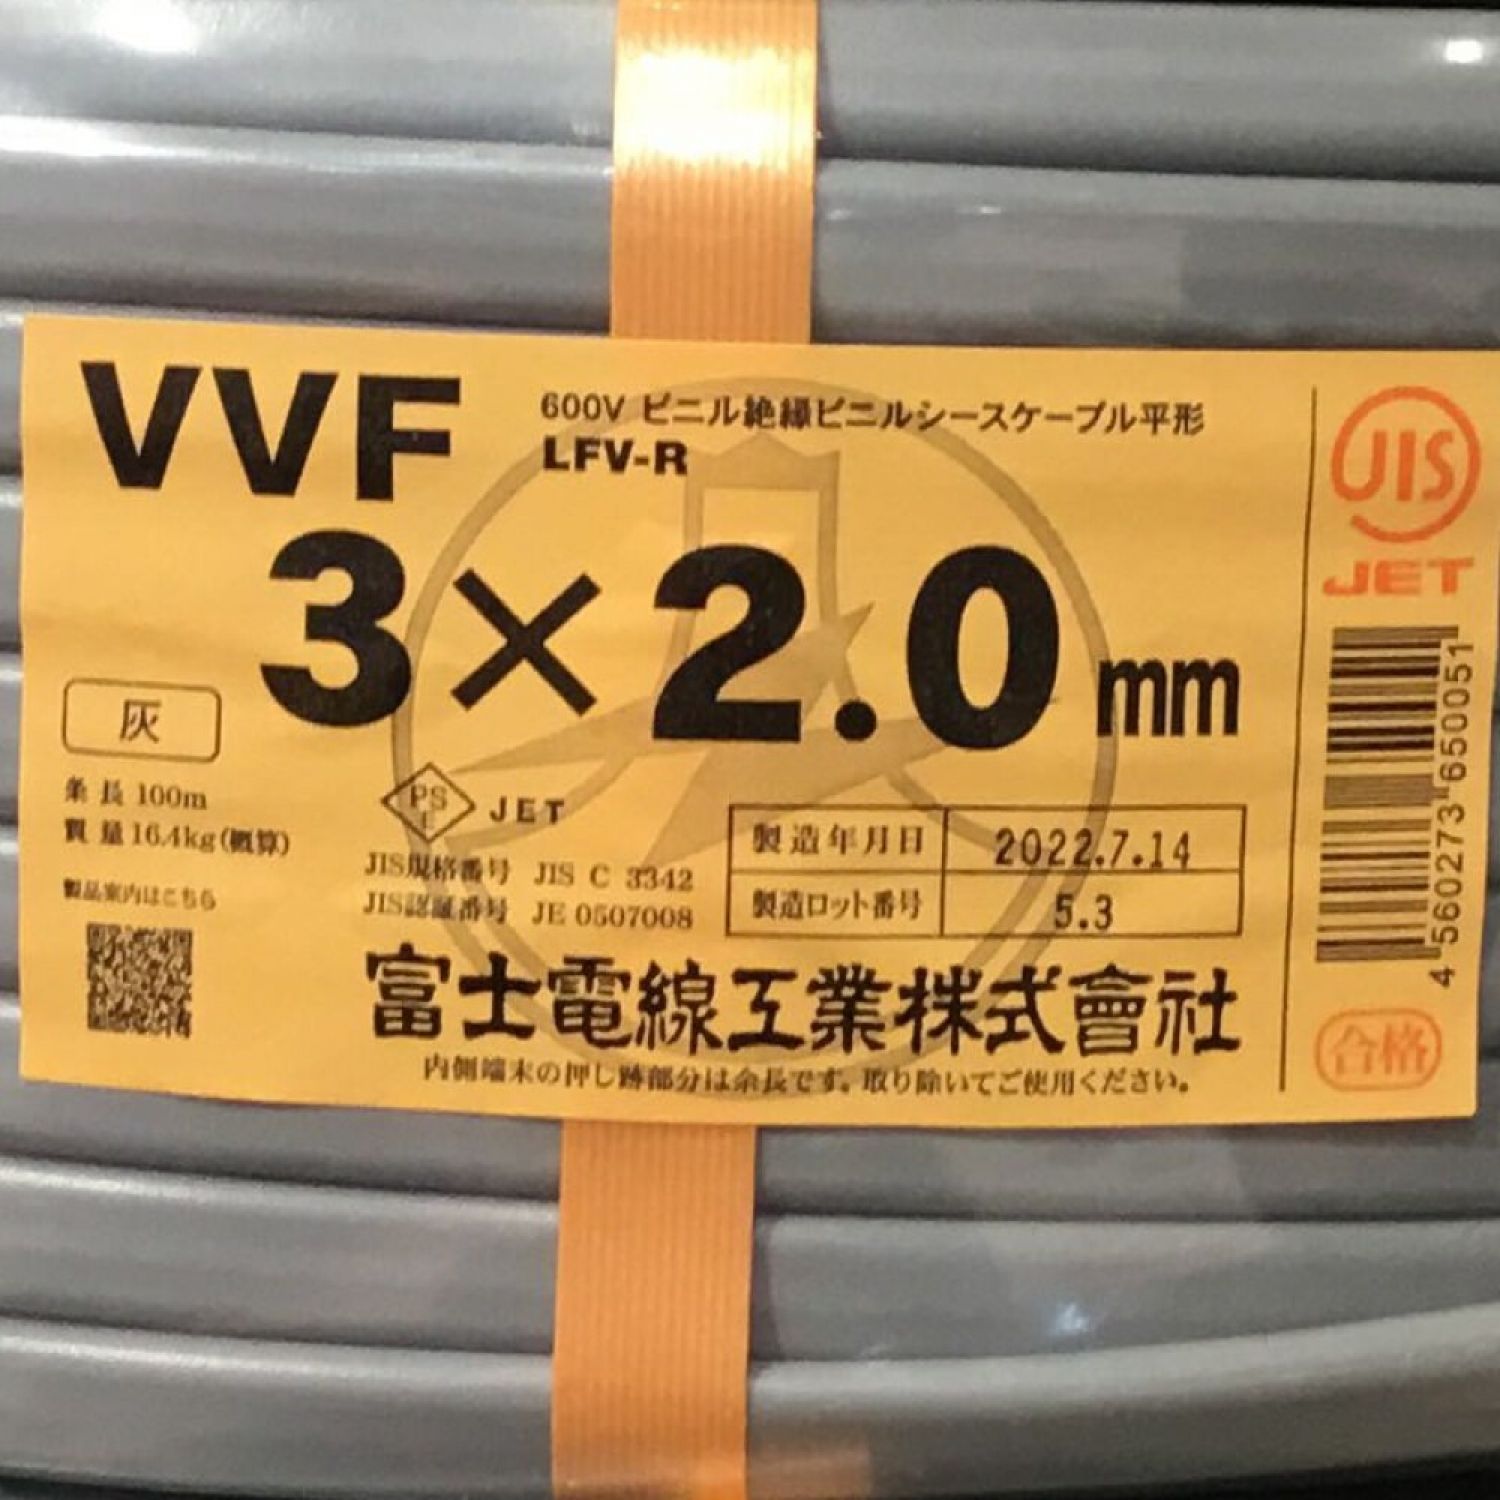 VVFケーブル (2× 2.0mm) 富士電線工業 新品未使用